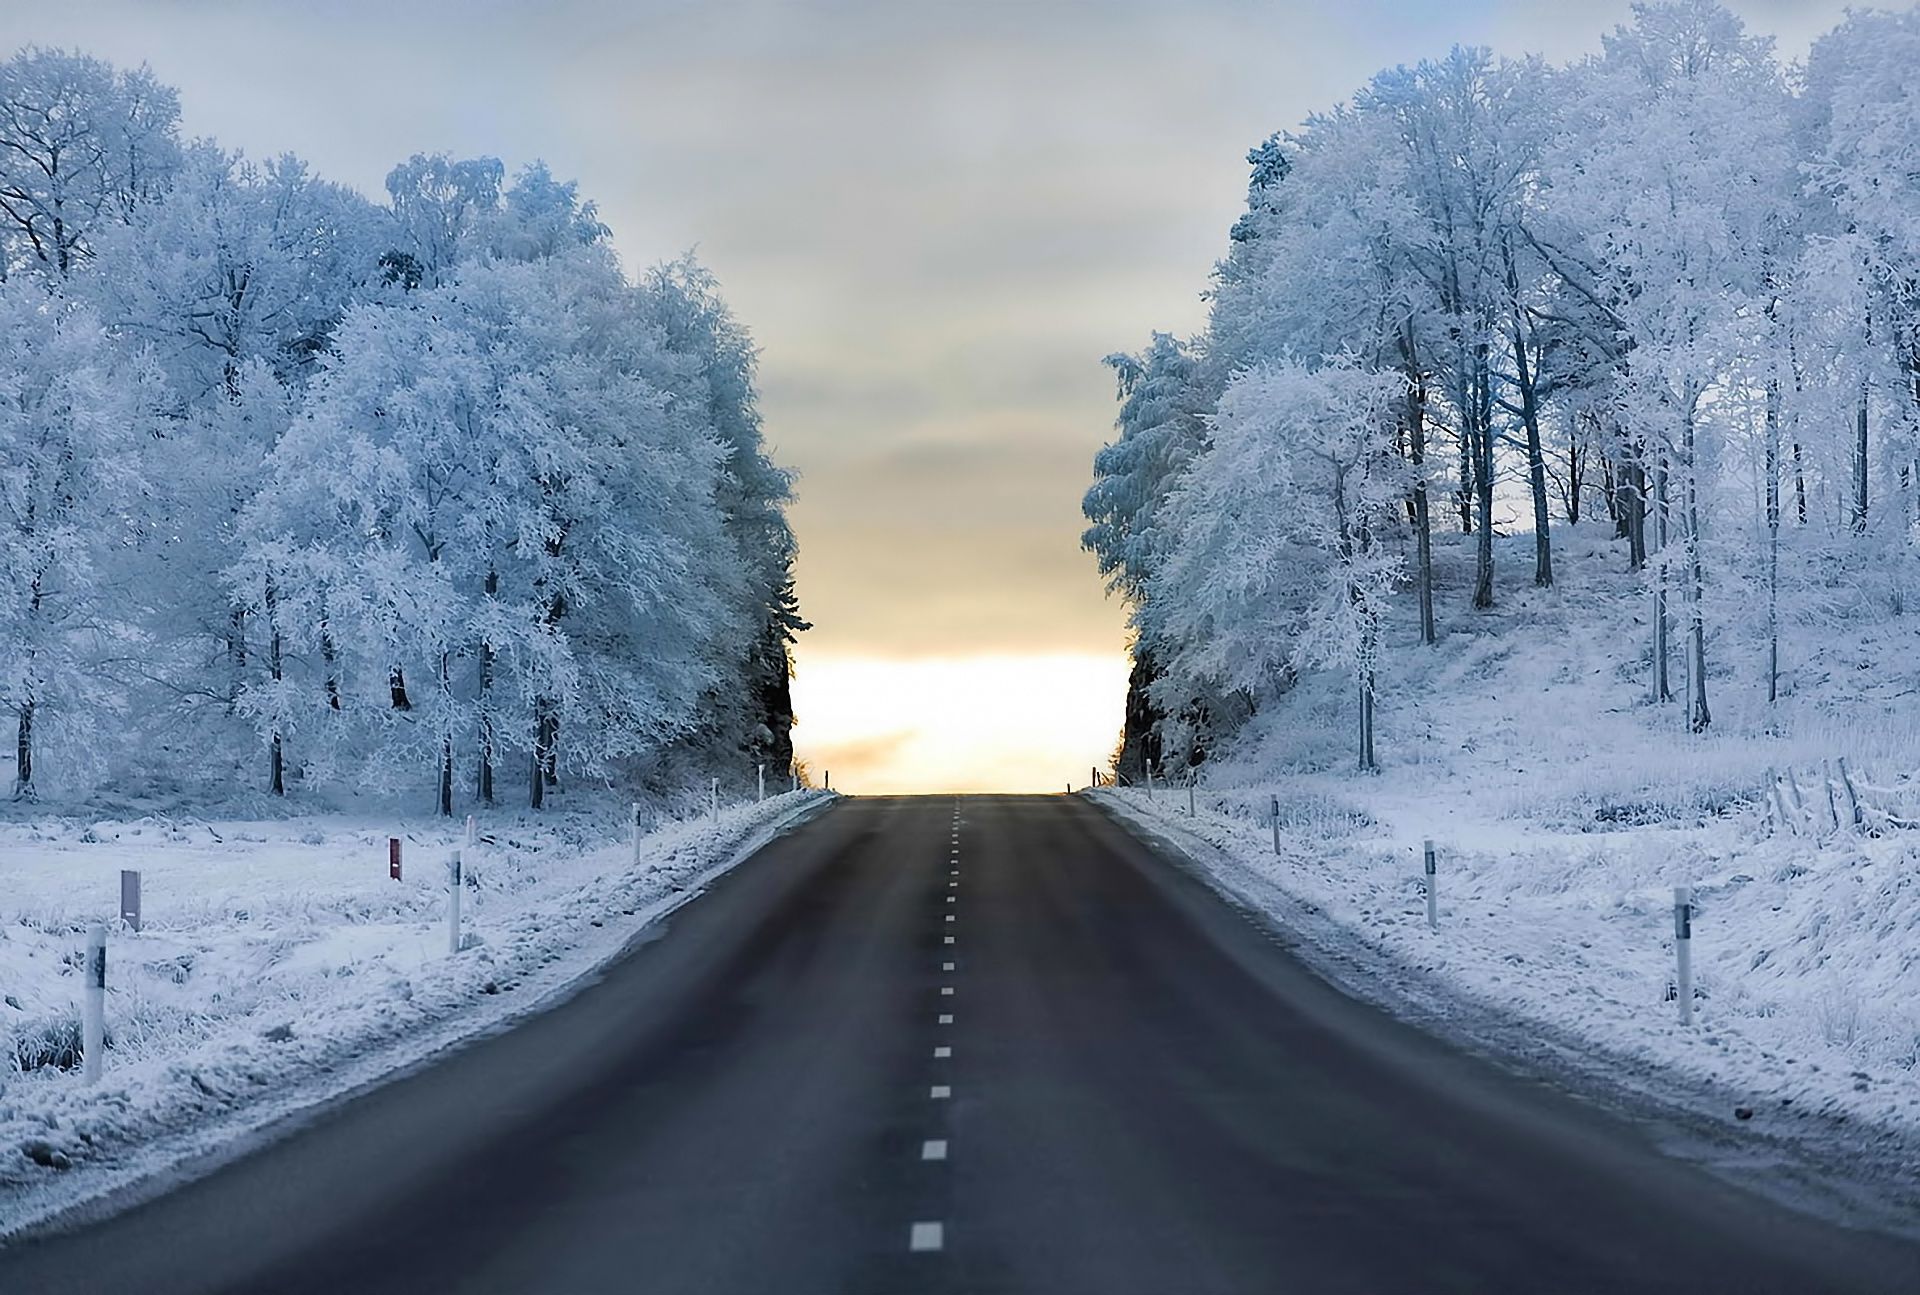 Winter Road Wallpaper | Android | Pinterest | Wallpaper